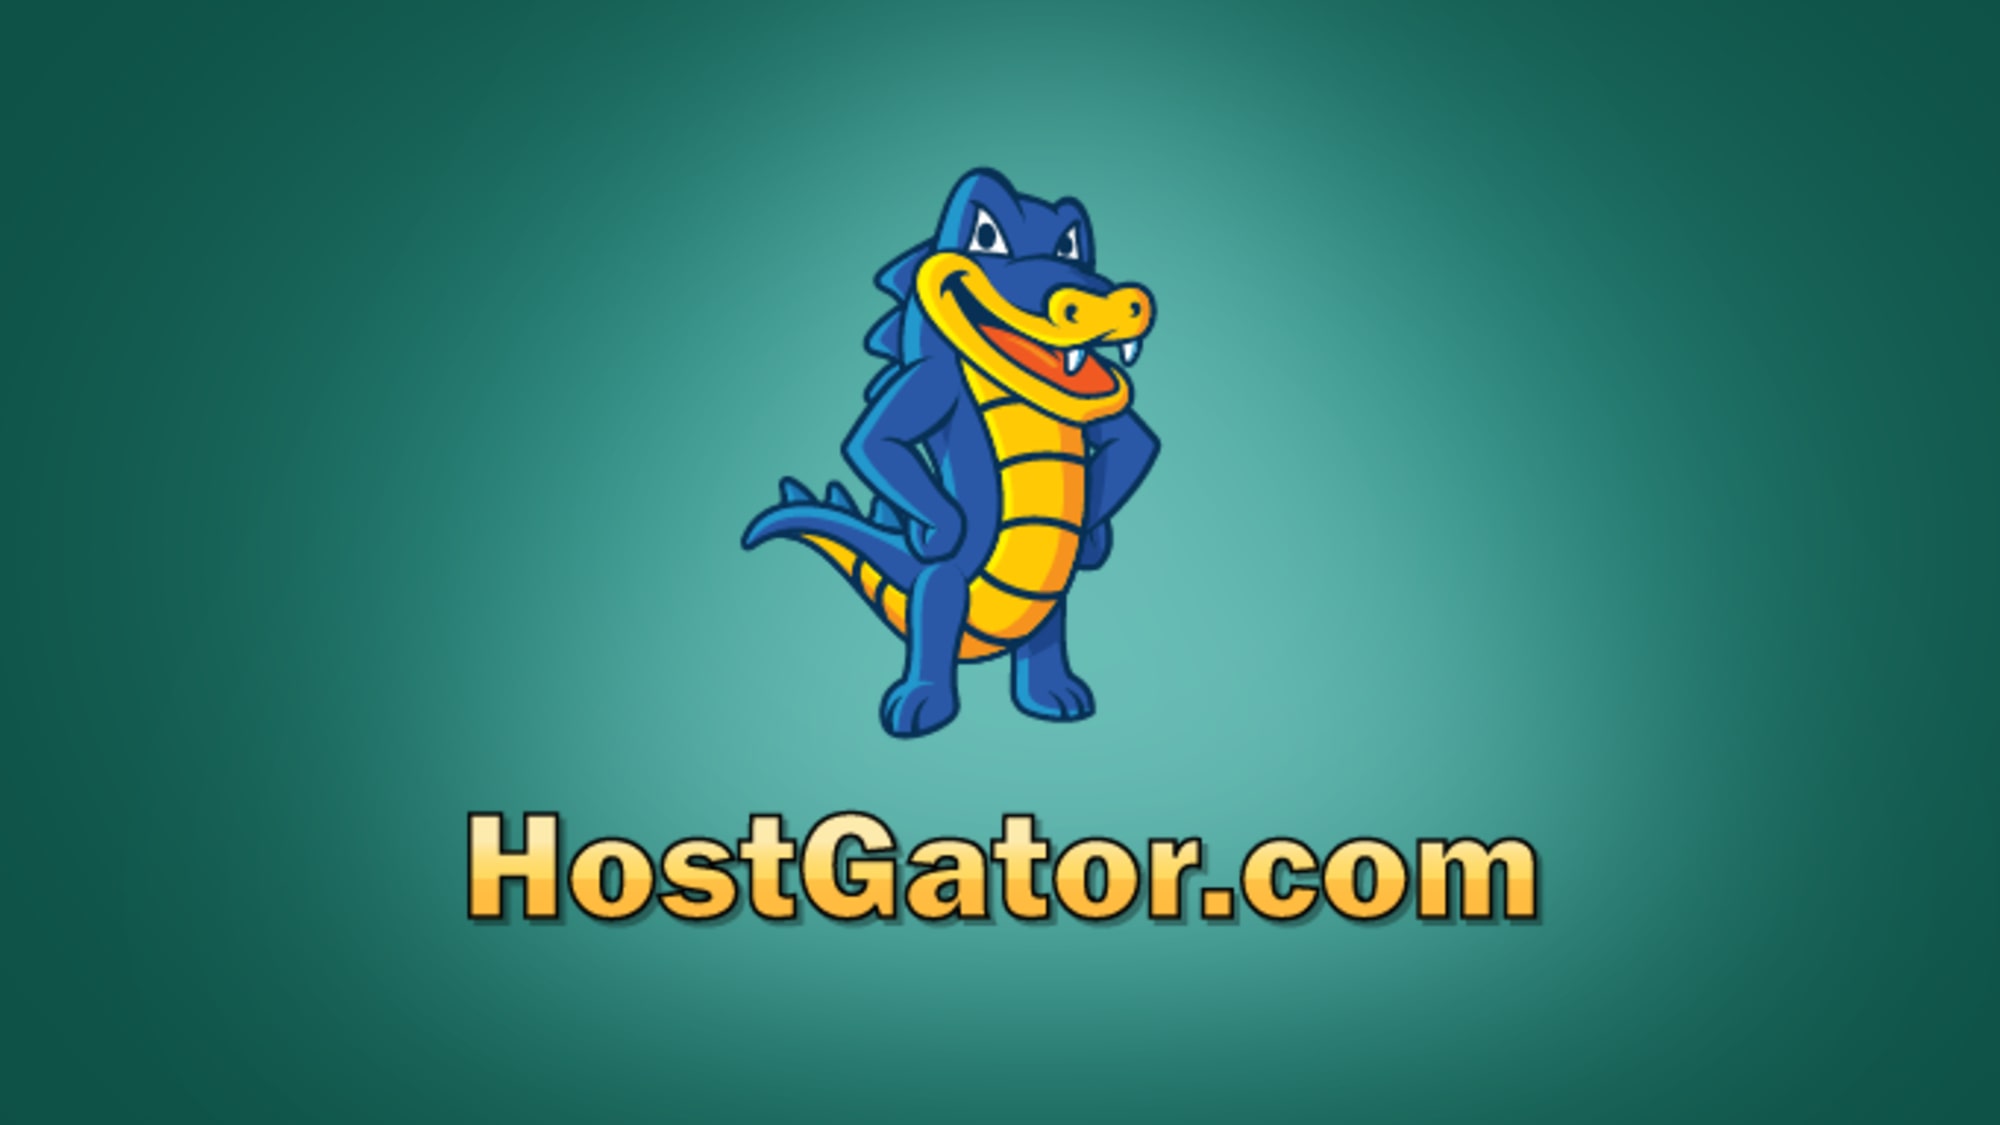 HostGator logo on green background with spotlight effect